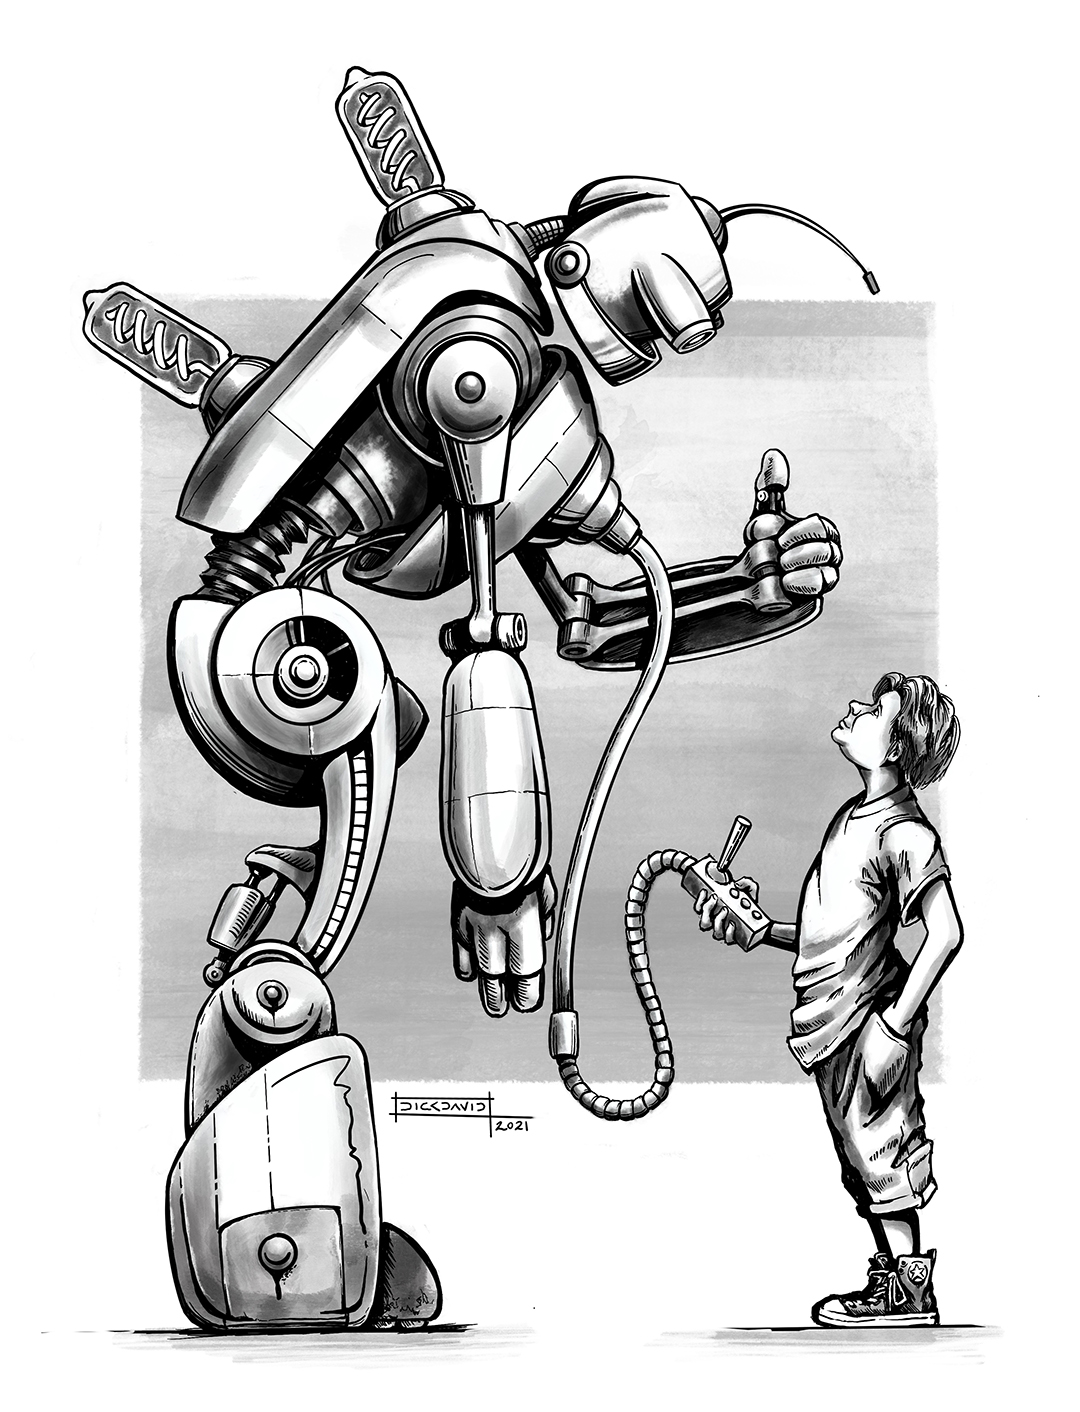 dickdavid the of richard [dick] david wezensky: I Heart Robots